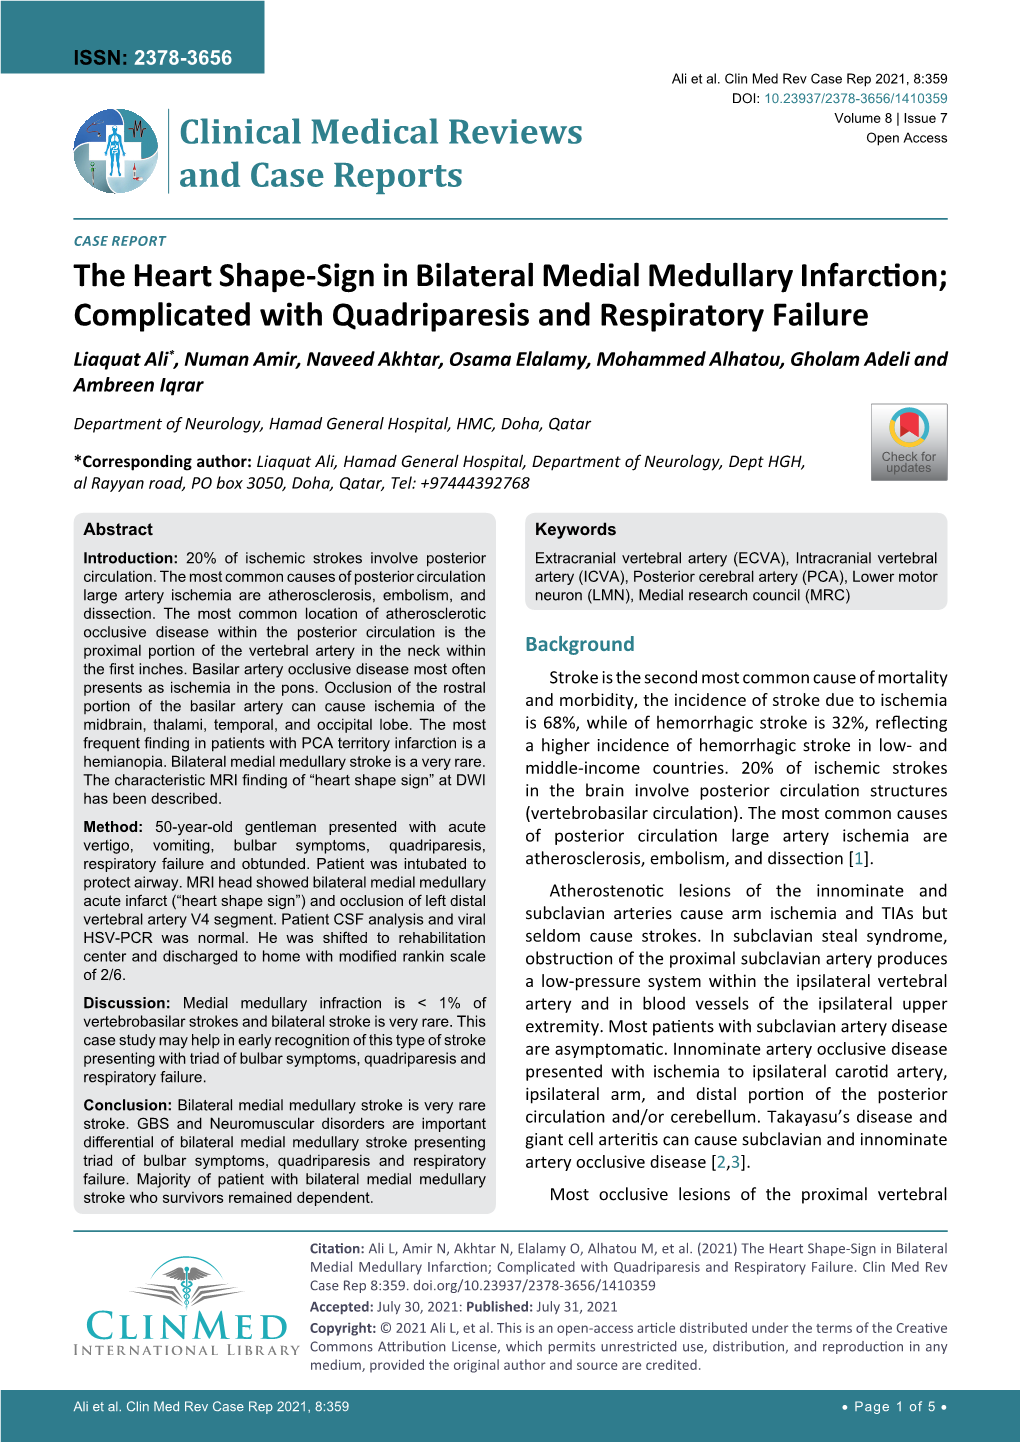 The Heart Shape-Sign in Bilateral Medial Medullary Infarction